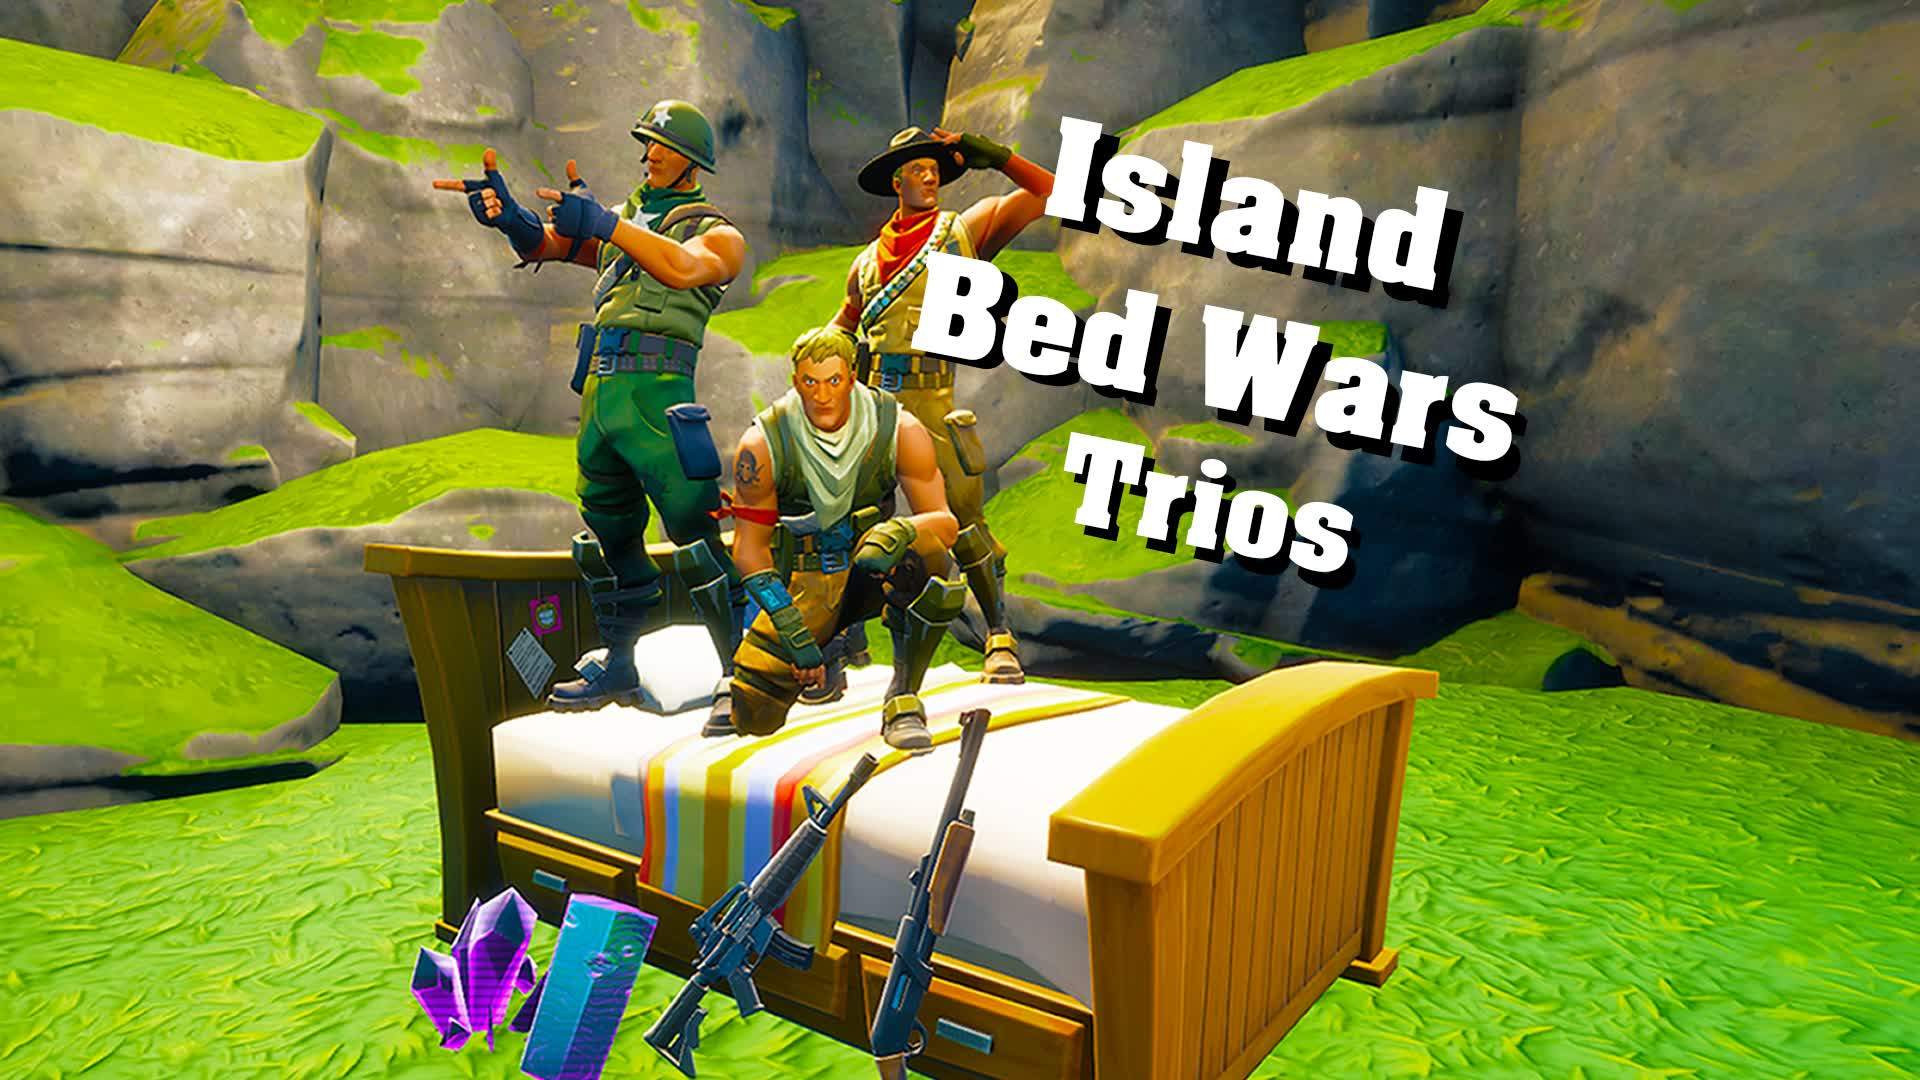 Island Bed Wars - Trios